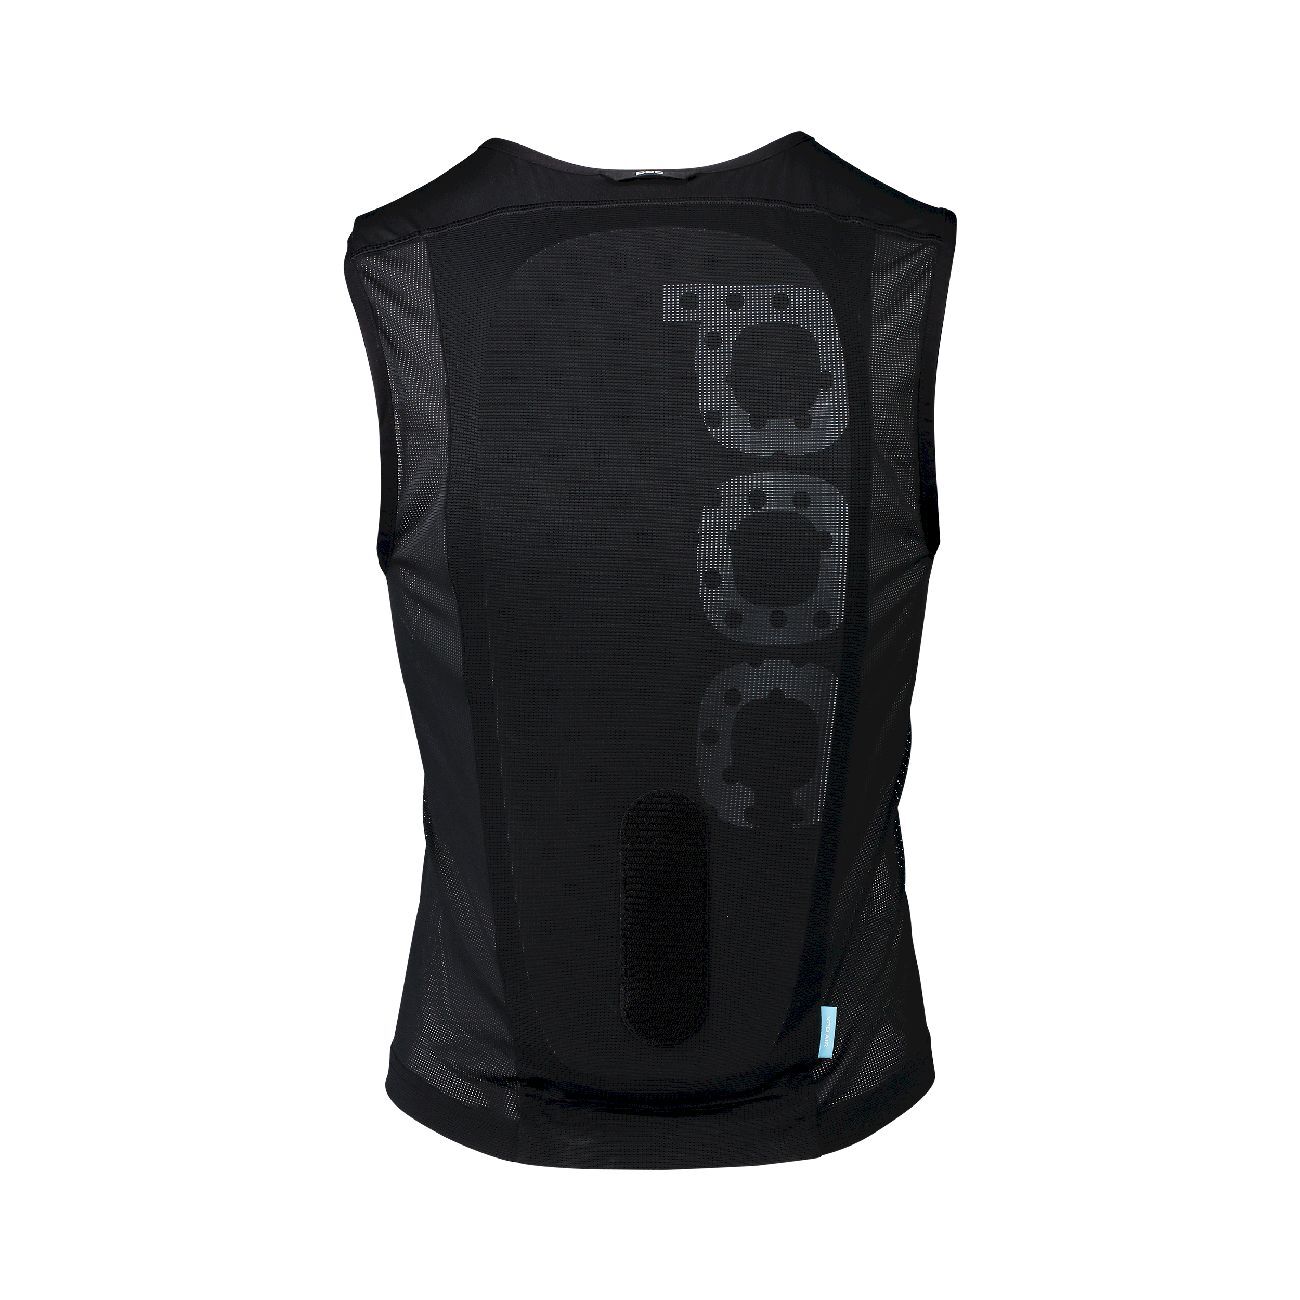 Poc Spine VPD Air Vest - Back protector - Women's